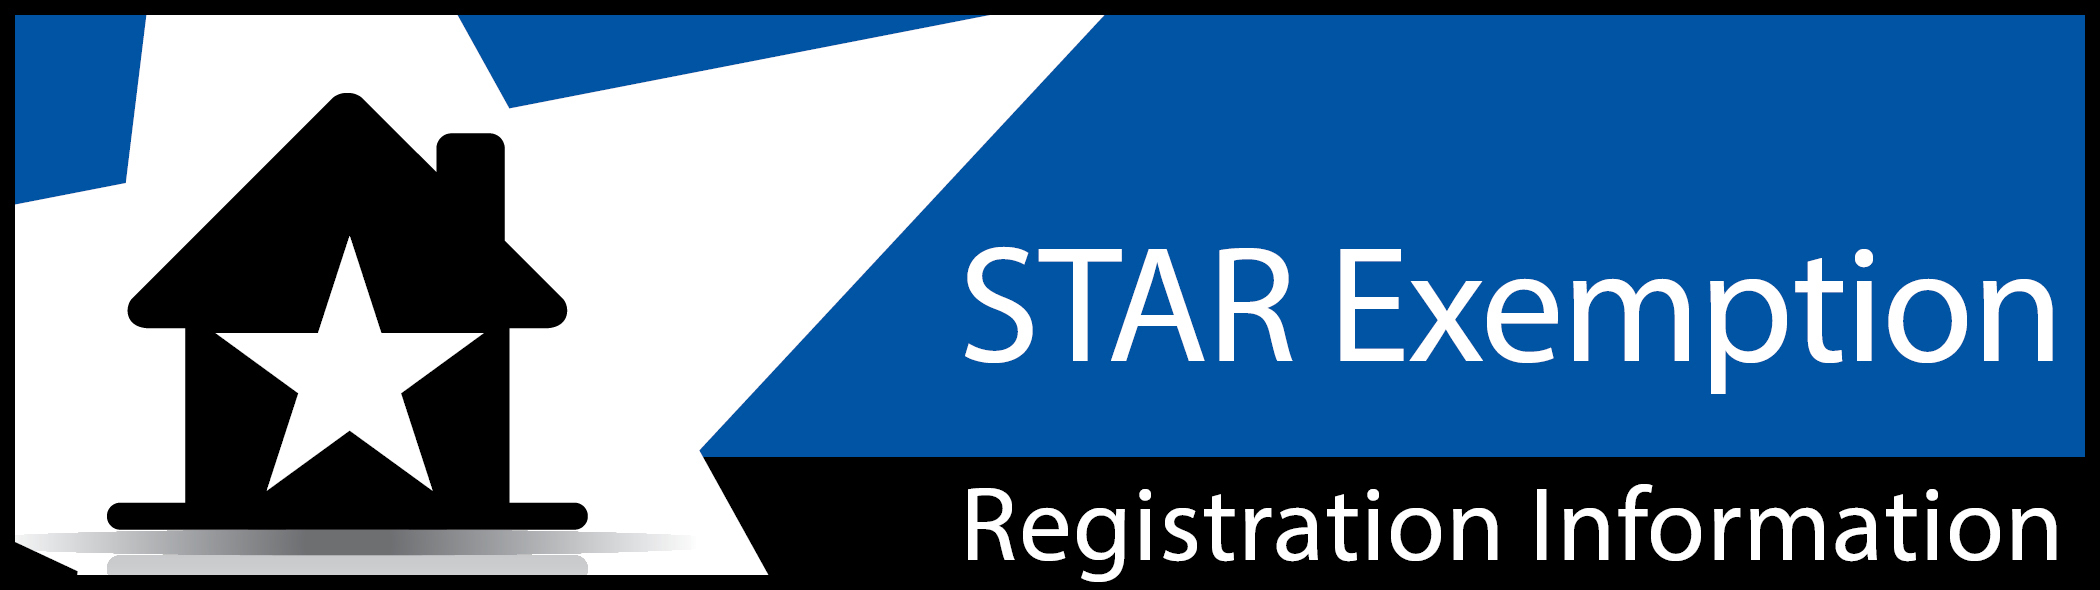 STAR Exemption - Registration Information